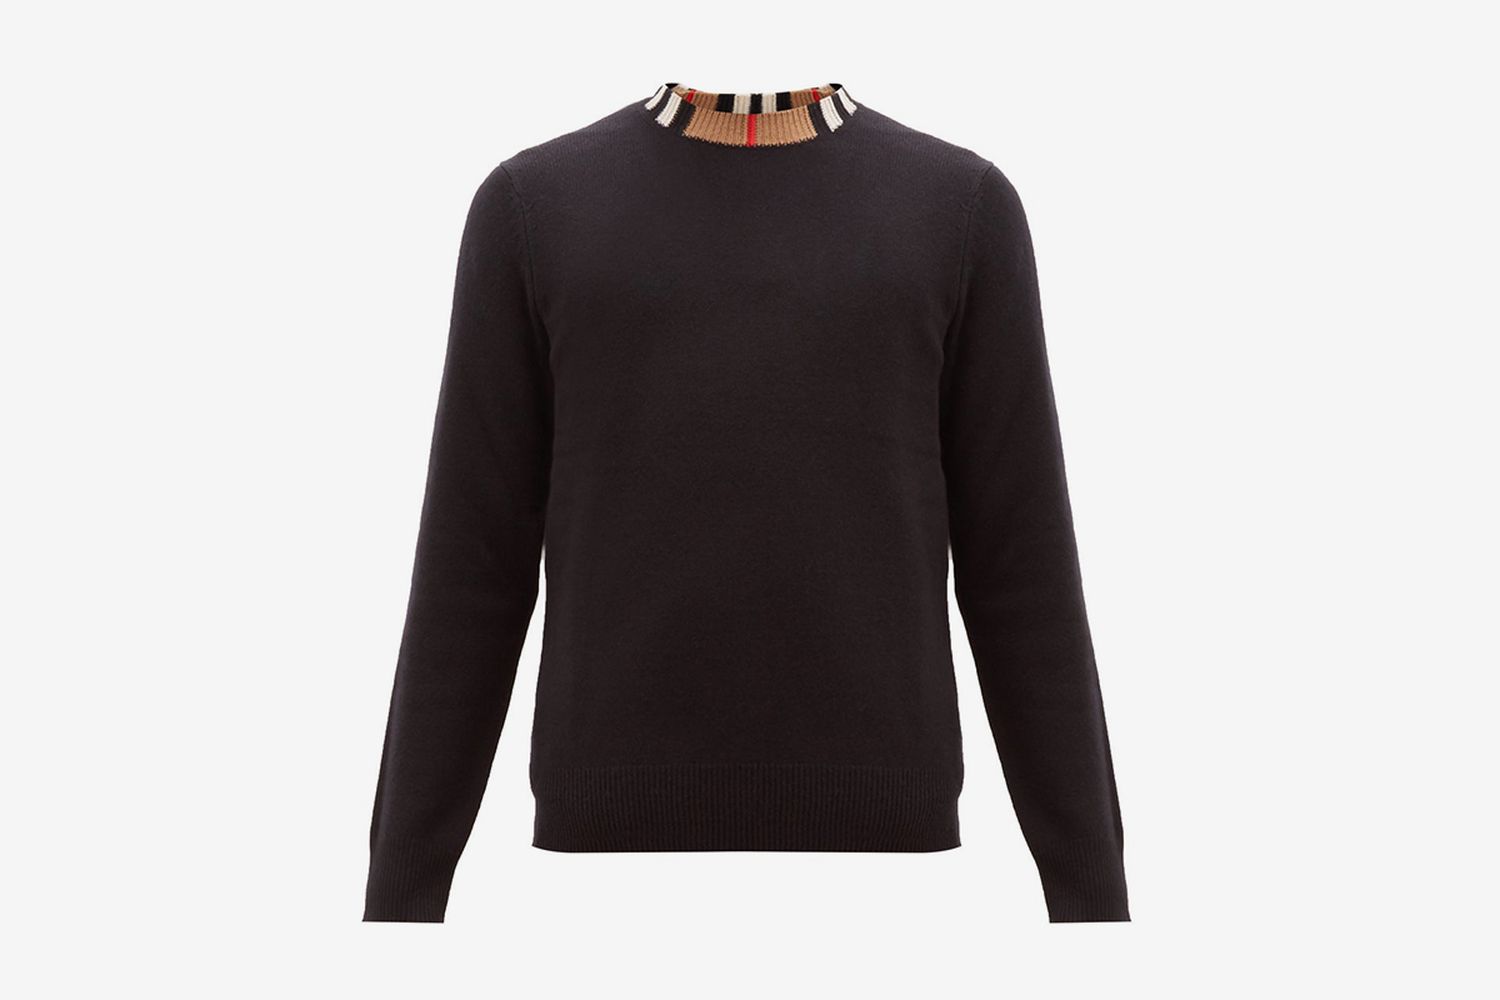 Noland House-Check Collar Cashmere Sweater